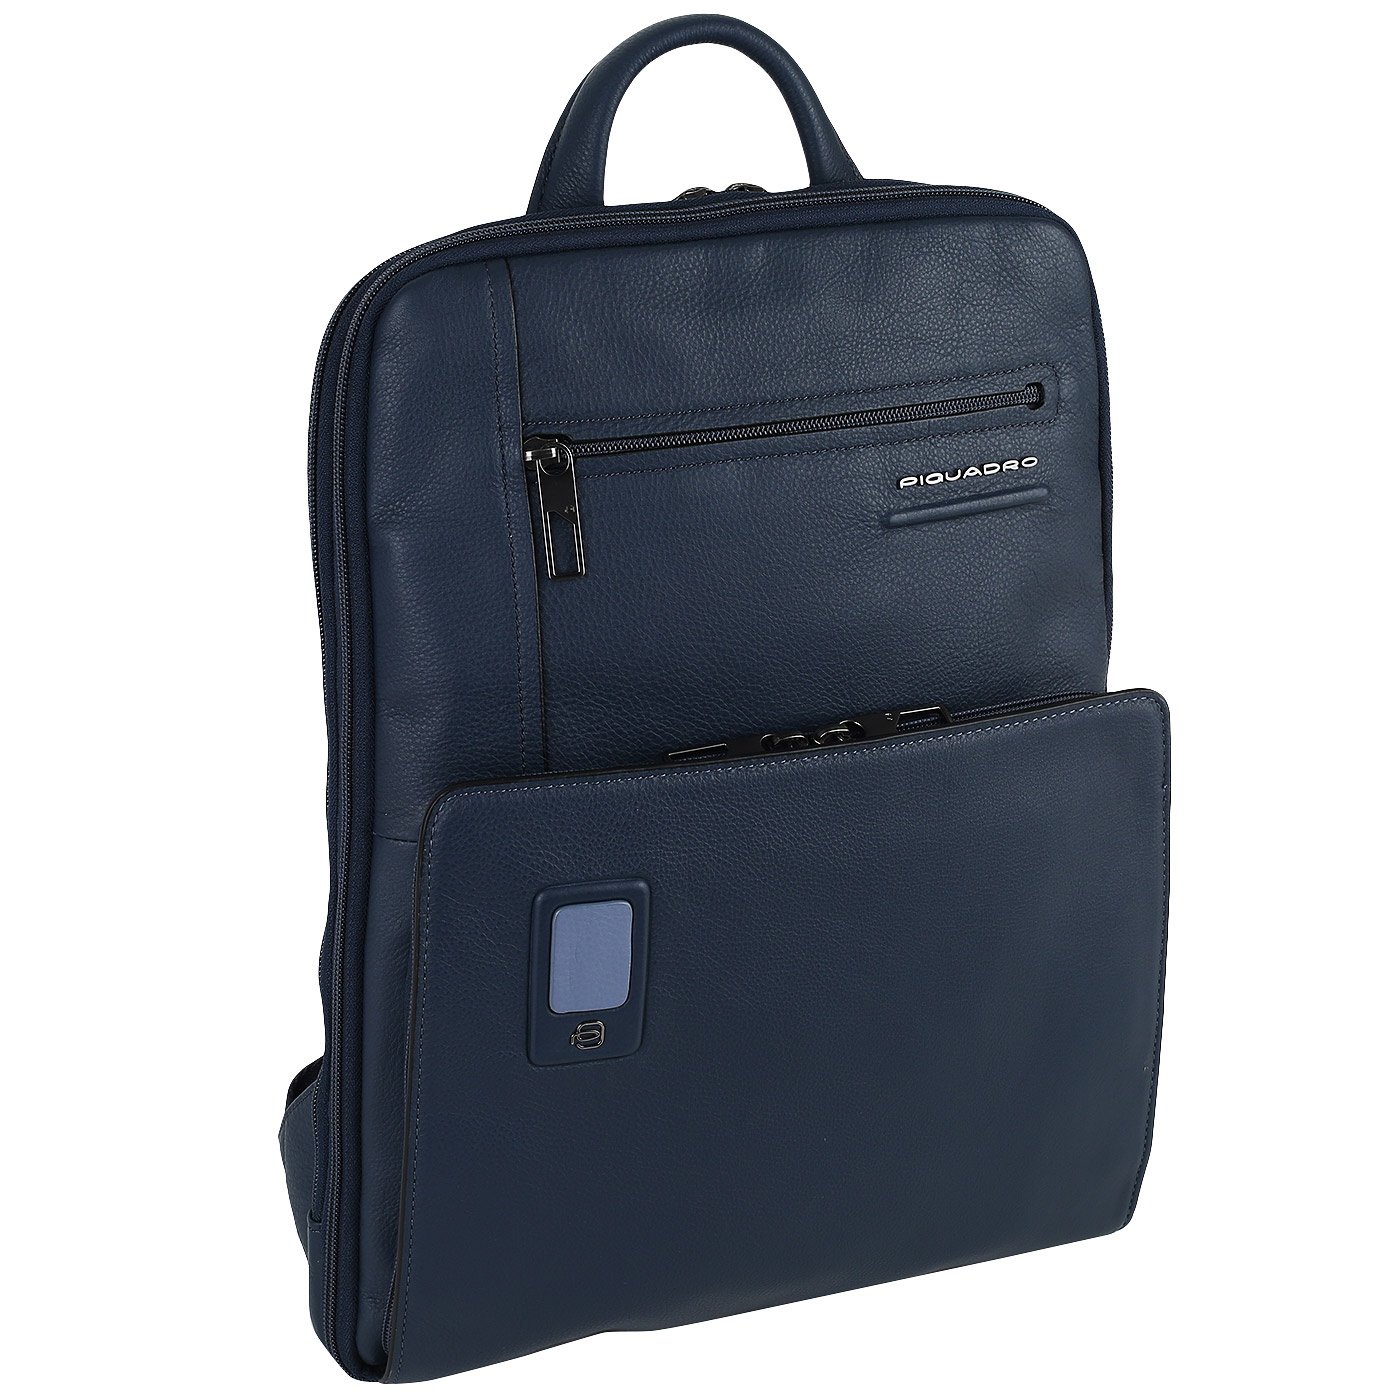 Рюкзак с отделением для ноутбука Piquadro Akron